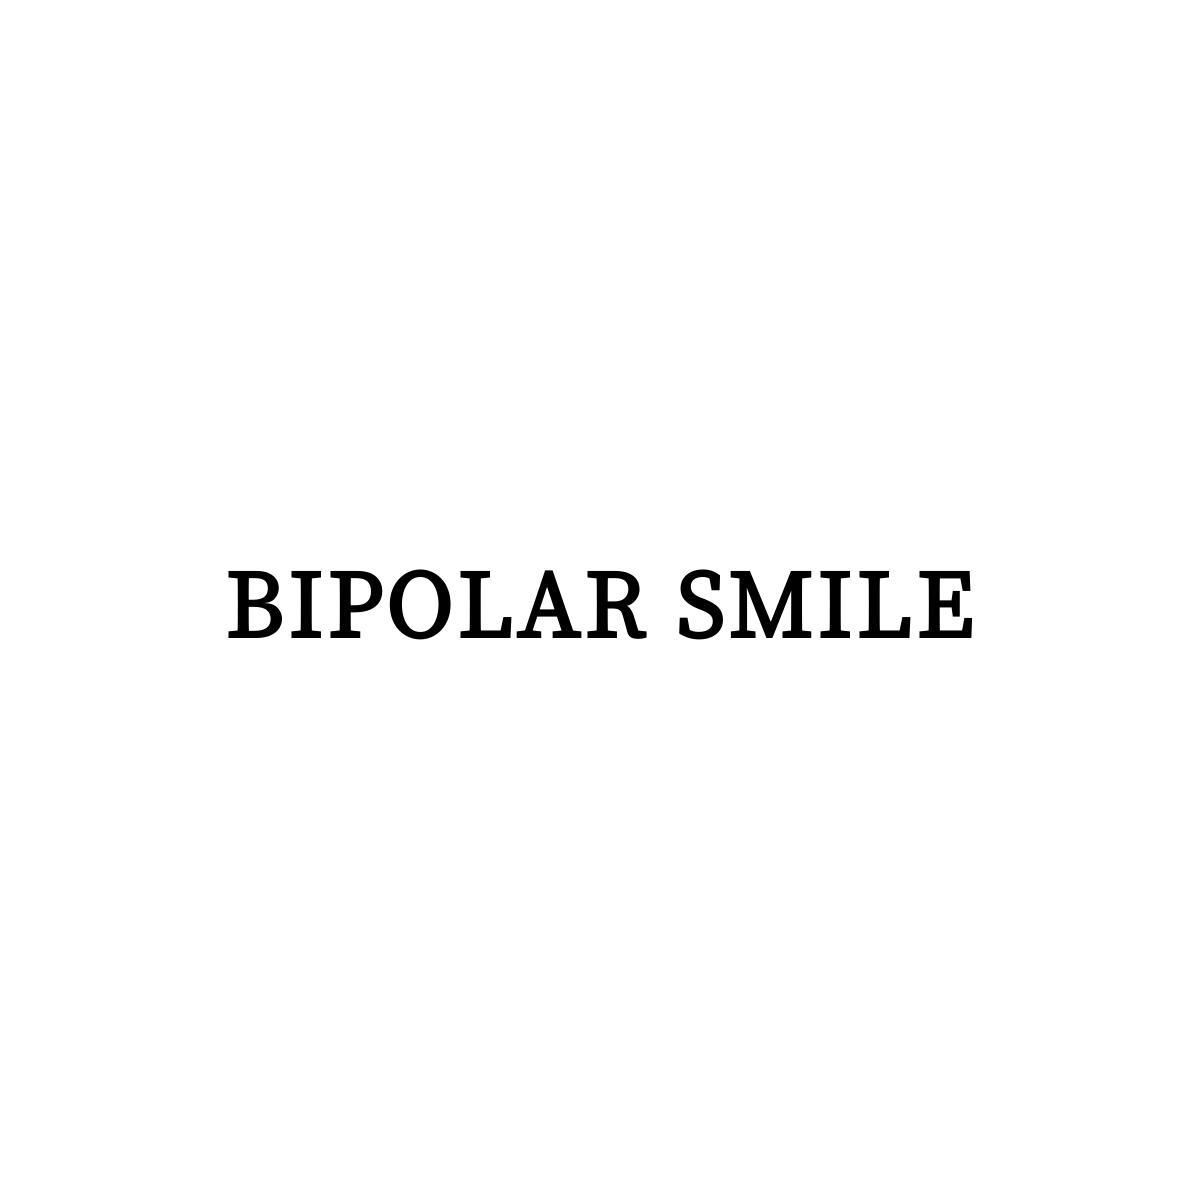 BIPOLAR SMILE